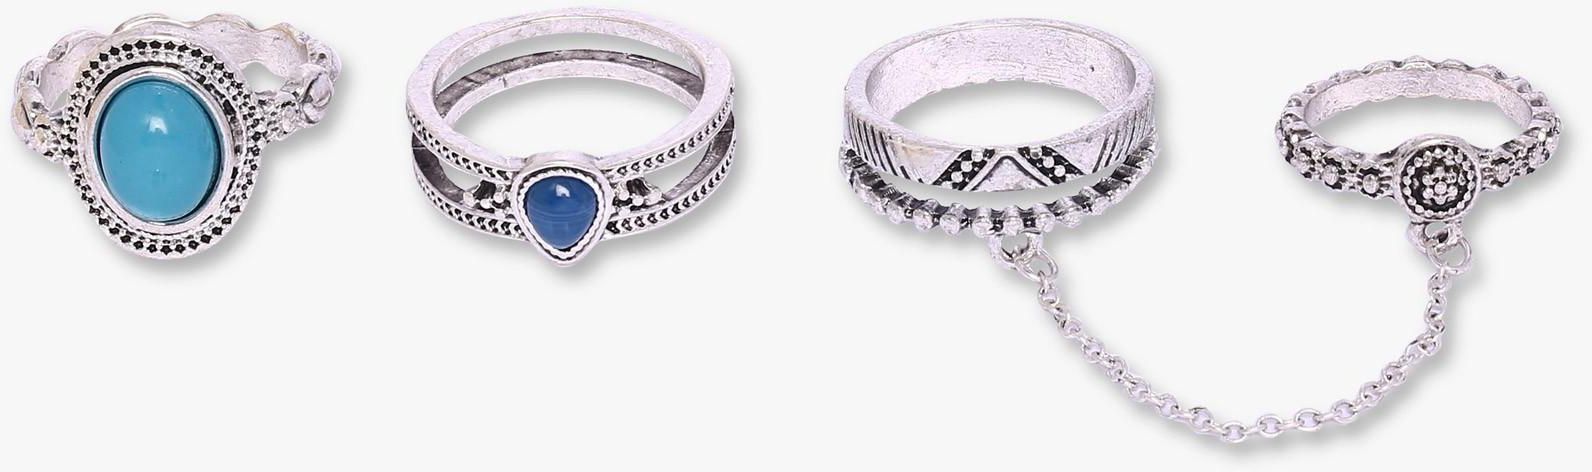 Silver Tandoori Ring Set